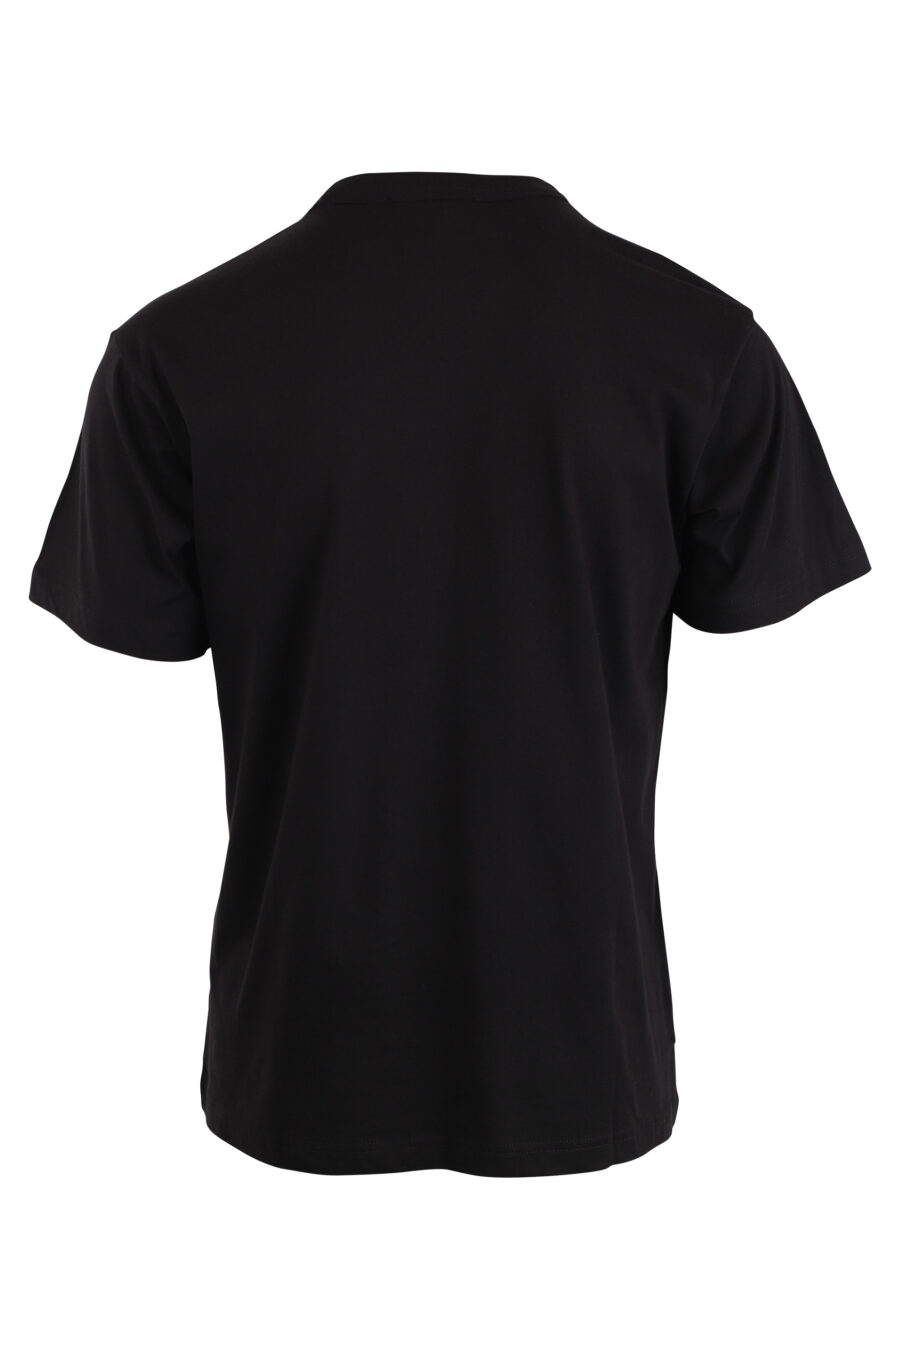 Camiseta negra con logo cuadrado centro - IMG 4224